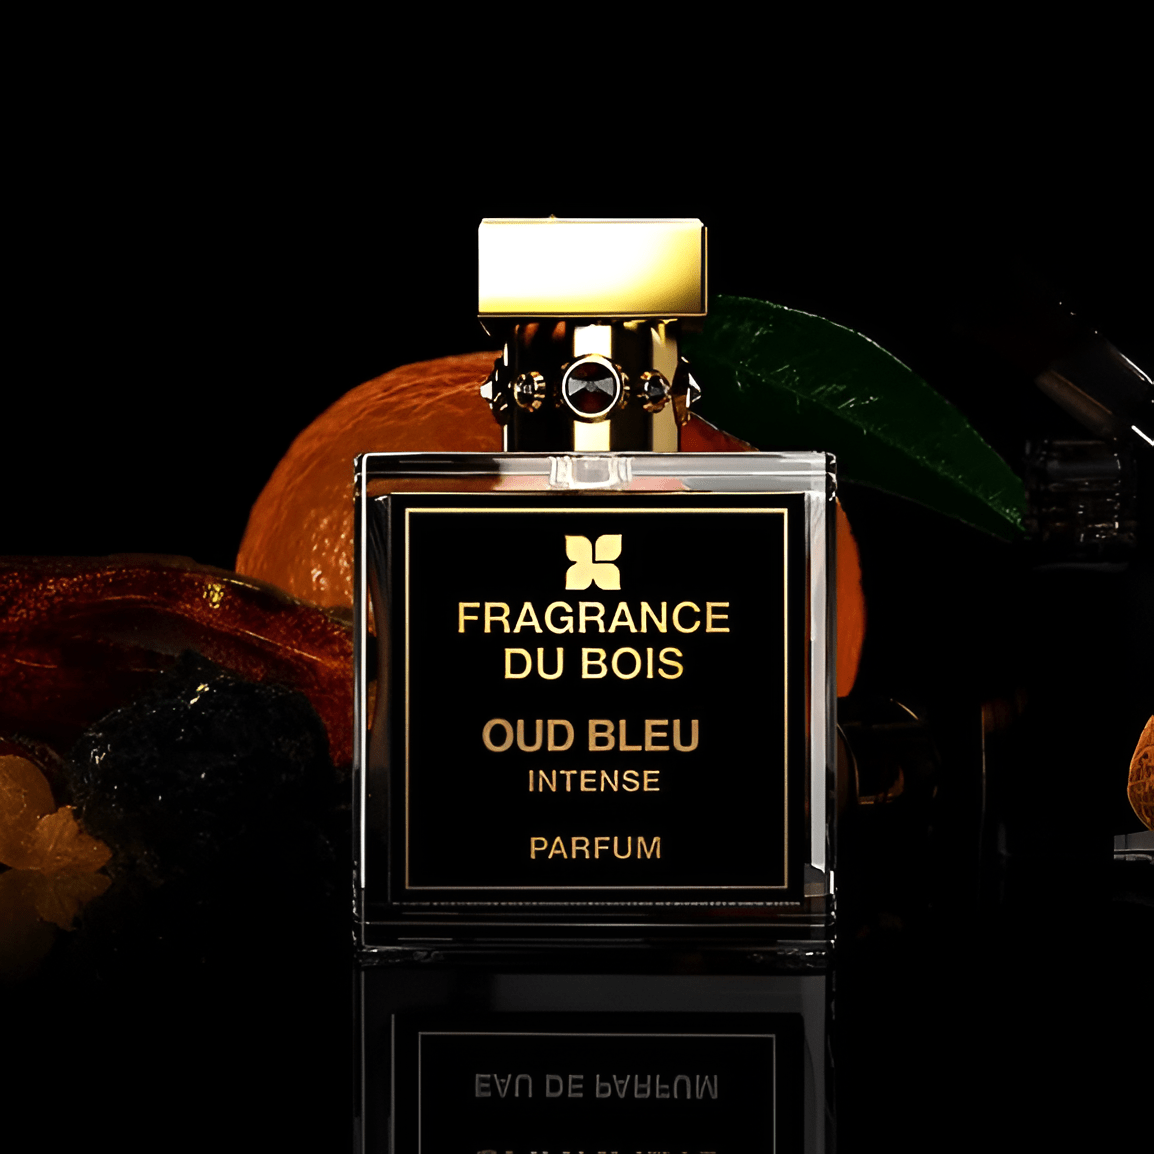 Fragrance Du Bois Oud Bleu Intense Parfum | My Perfume Shop Australia